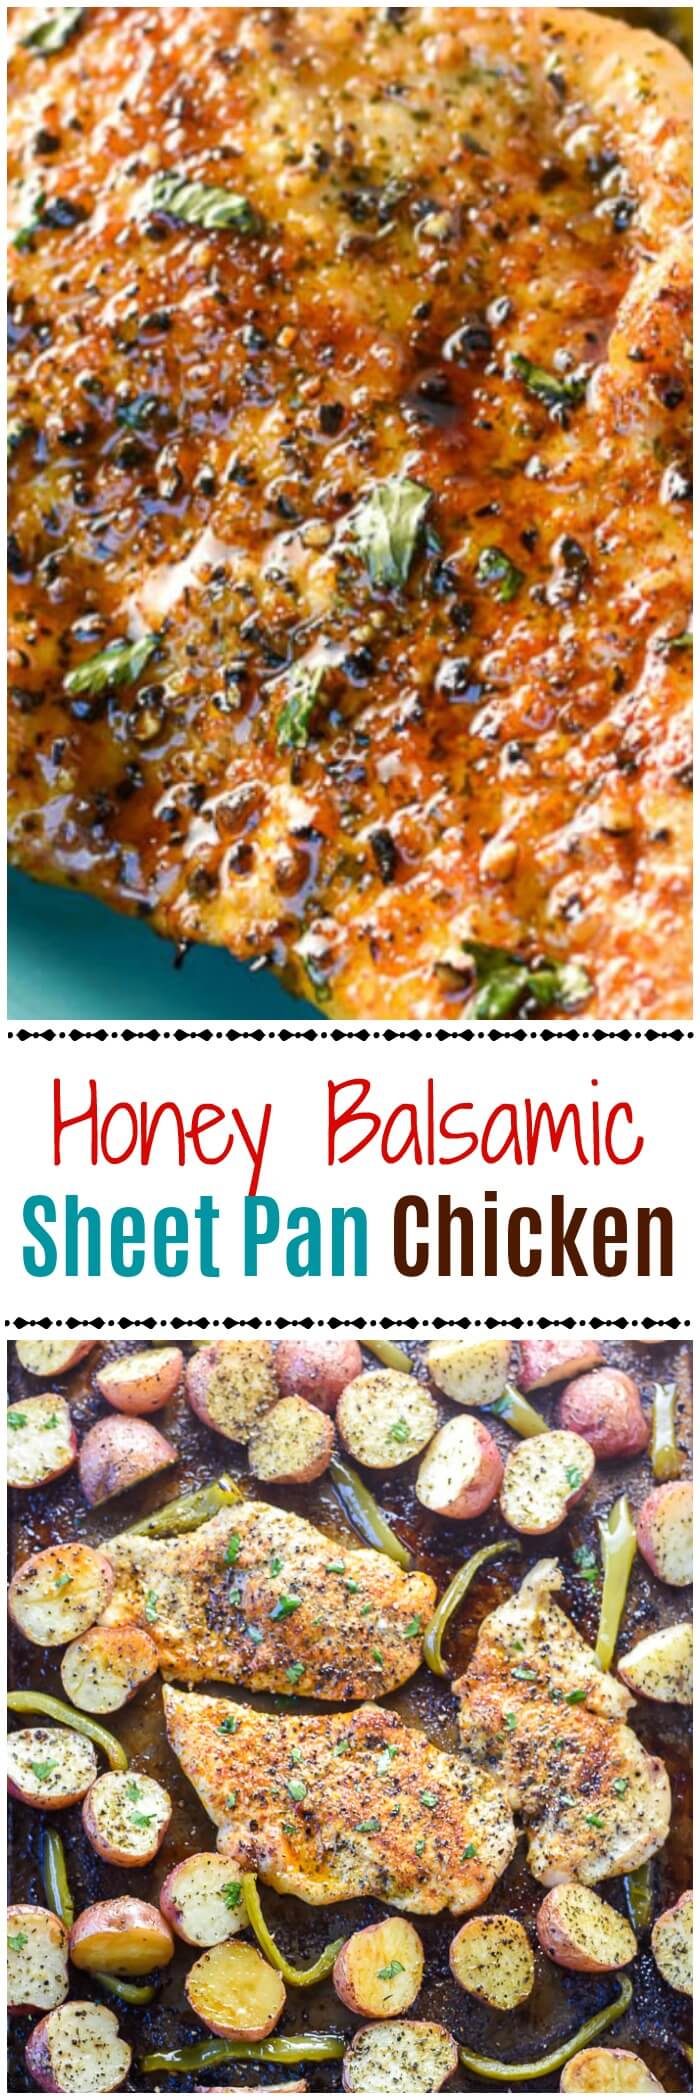 Honey Balsamic Sheet Pan Chicken